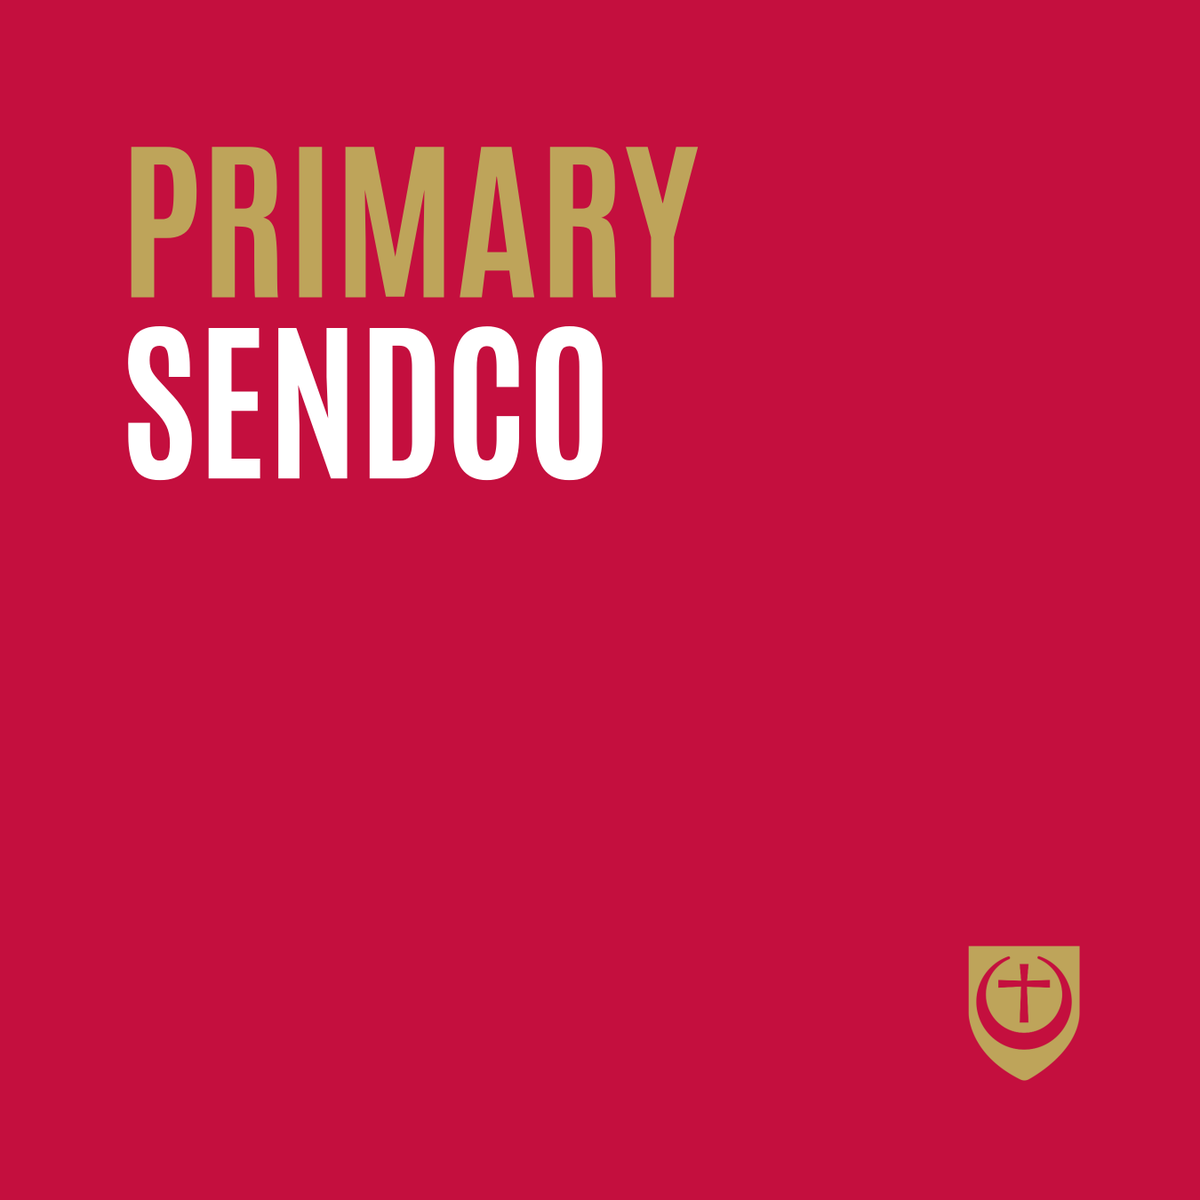 📣 VACANCY📣

⭐Primary SENDCO
🏫NCEA Trust
📍 Ashington

Interested? Click here to apply 👉👉👉ncea.org.uk/sendco/

#NorthEastJobs #Primary #SENDCO #SEN #Education